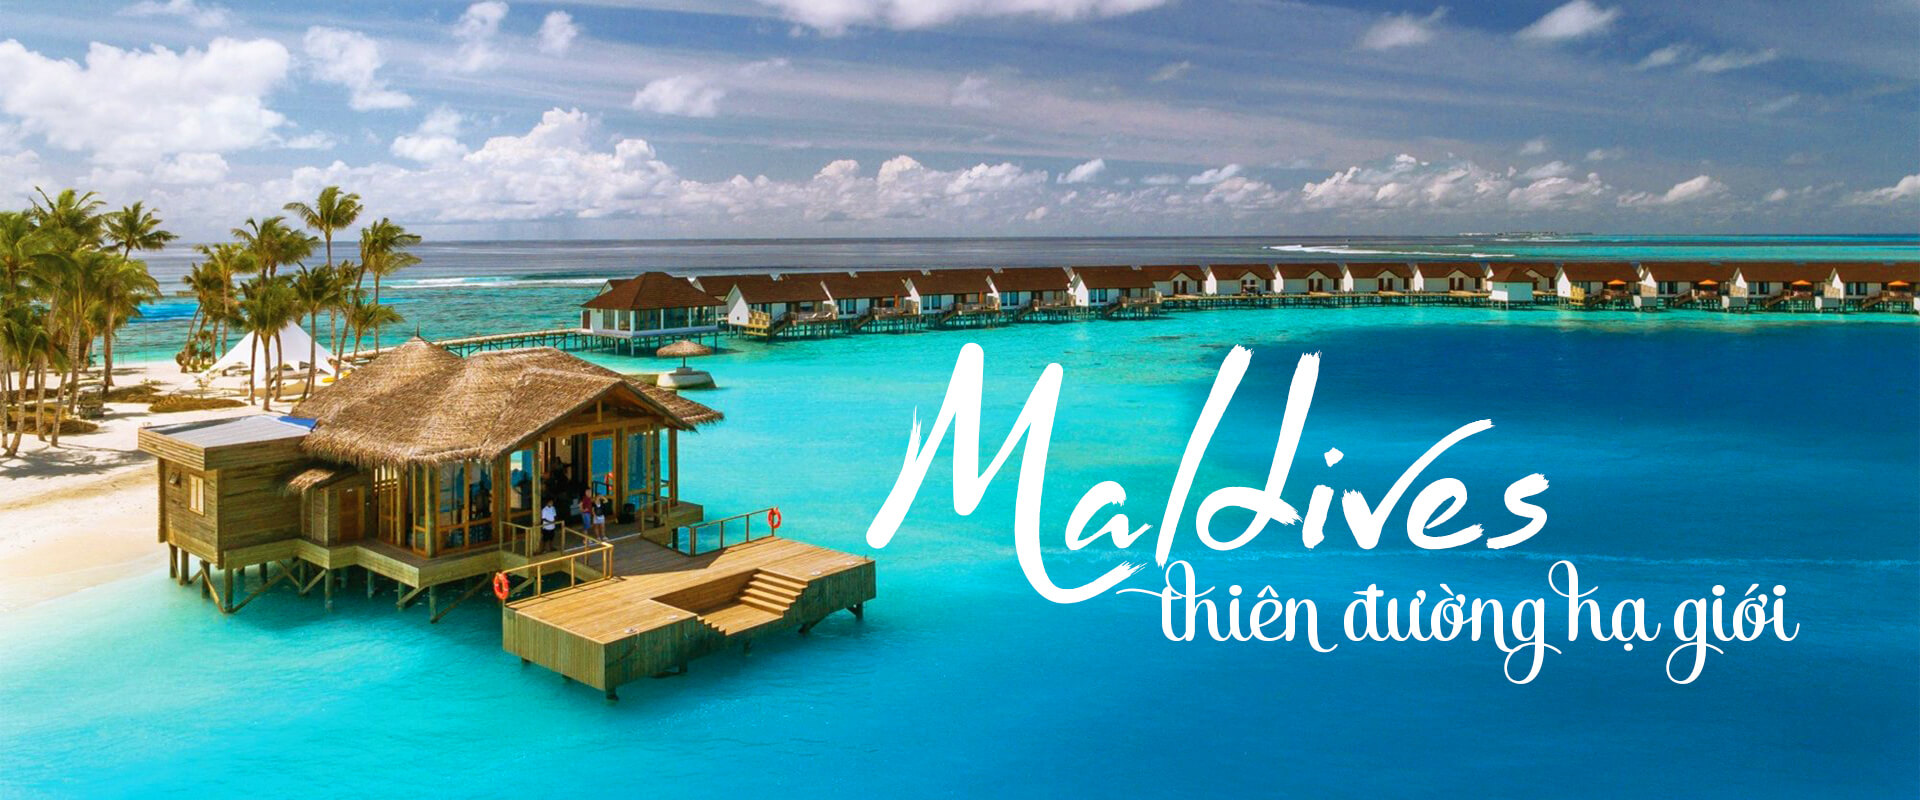 banner.maldives